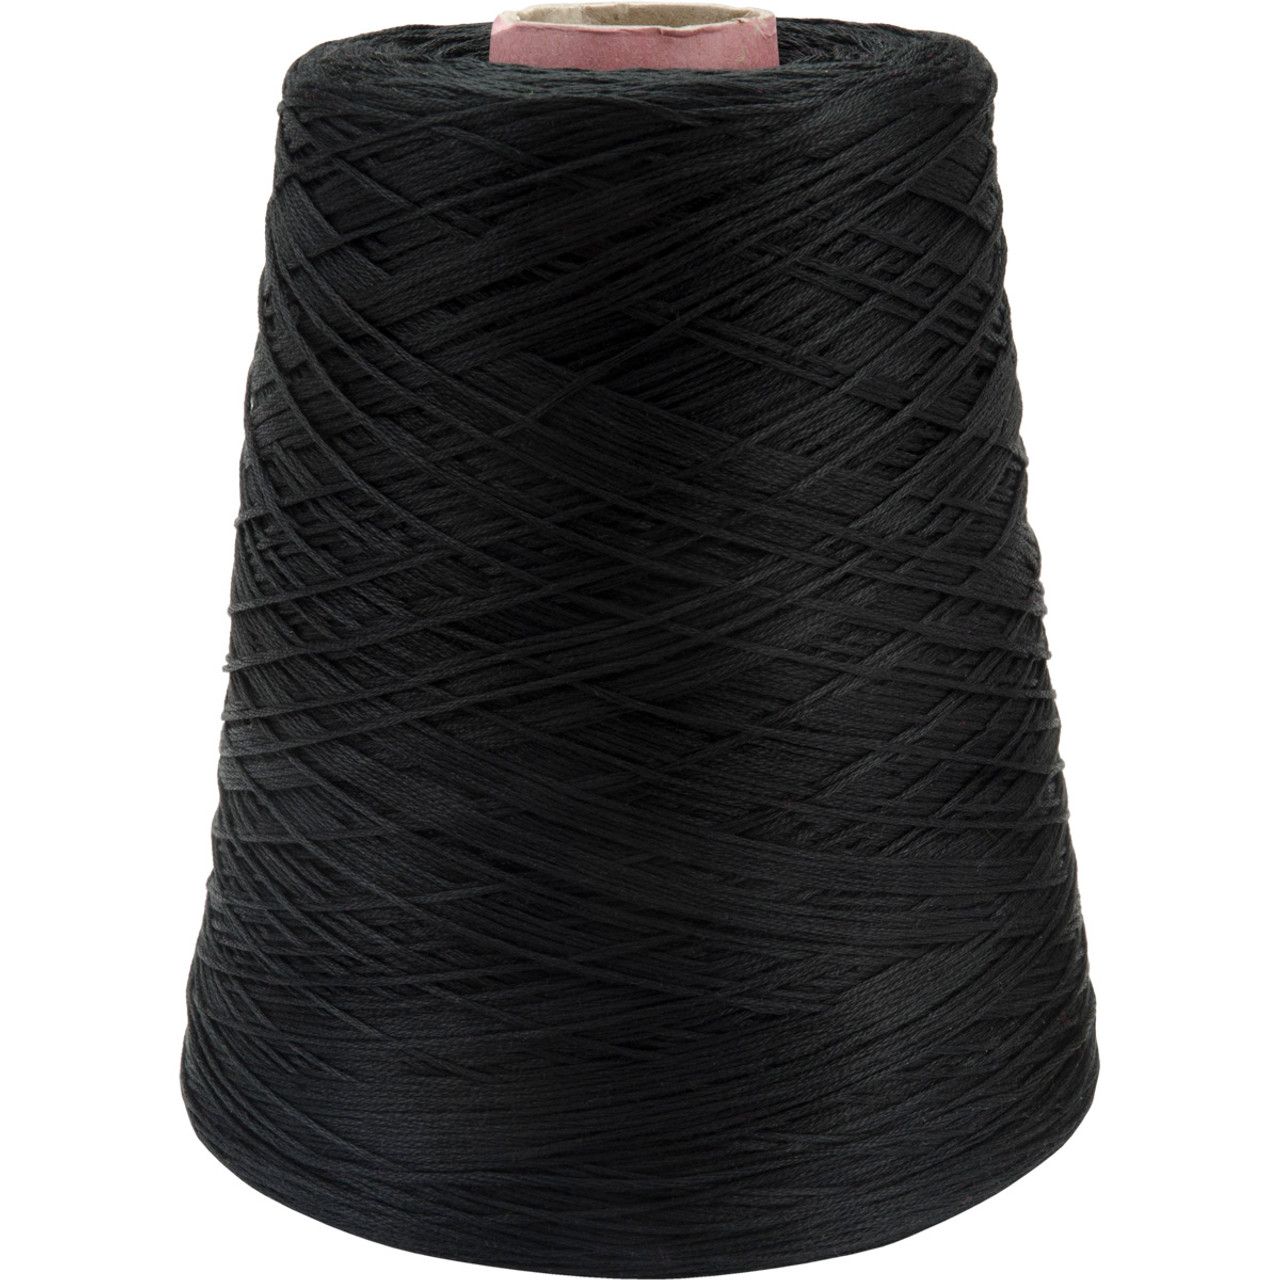 DMC 6-Strand Embroidery Cotton 500g Cone-Black 5628-310 - GettyCrafts